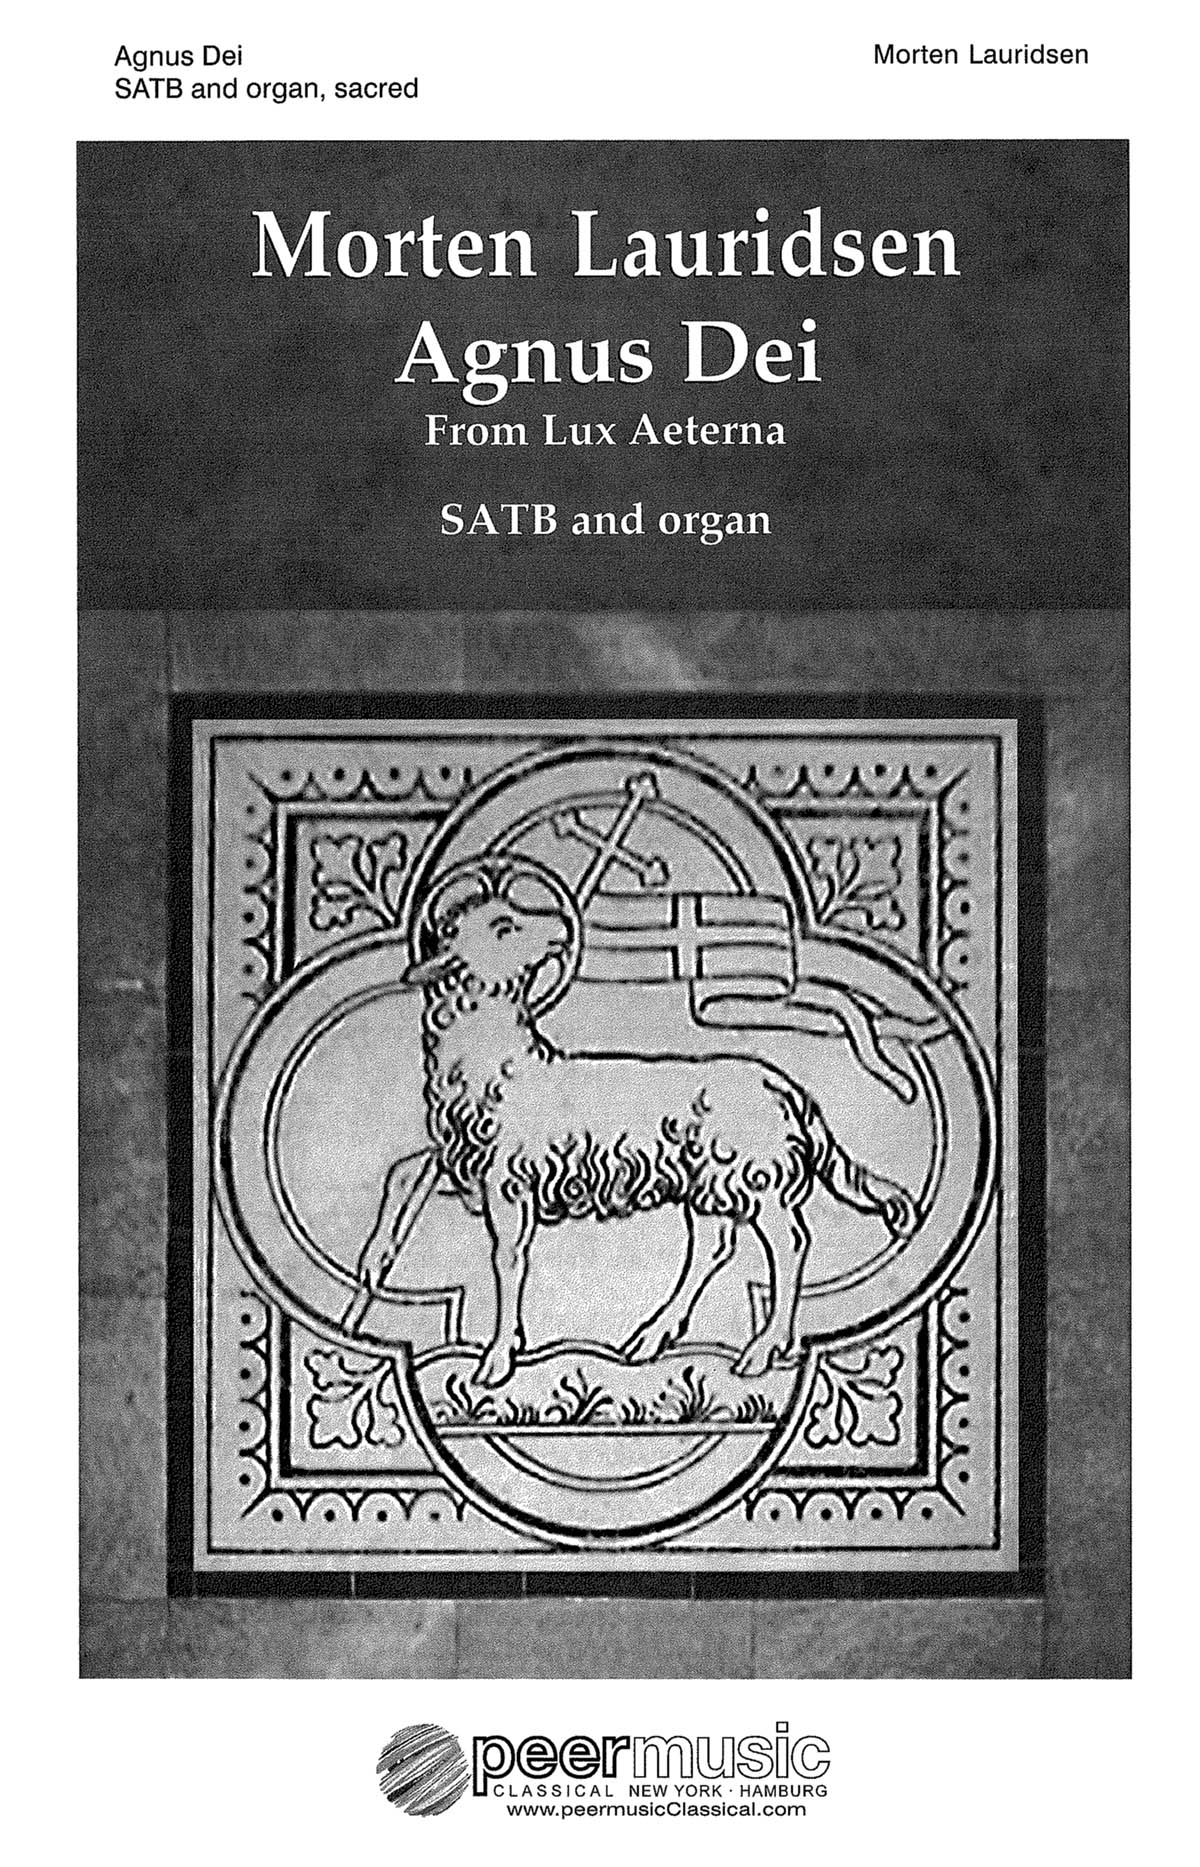 Morton Lauridsen: Agnus Dei